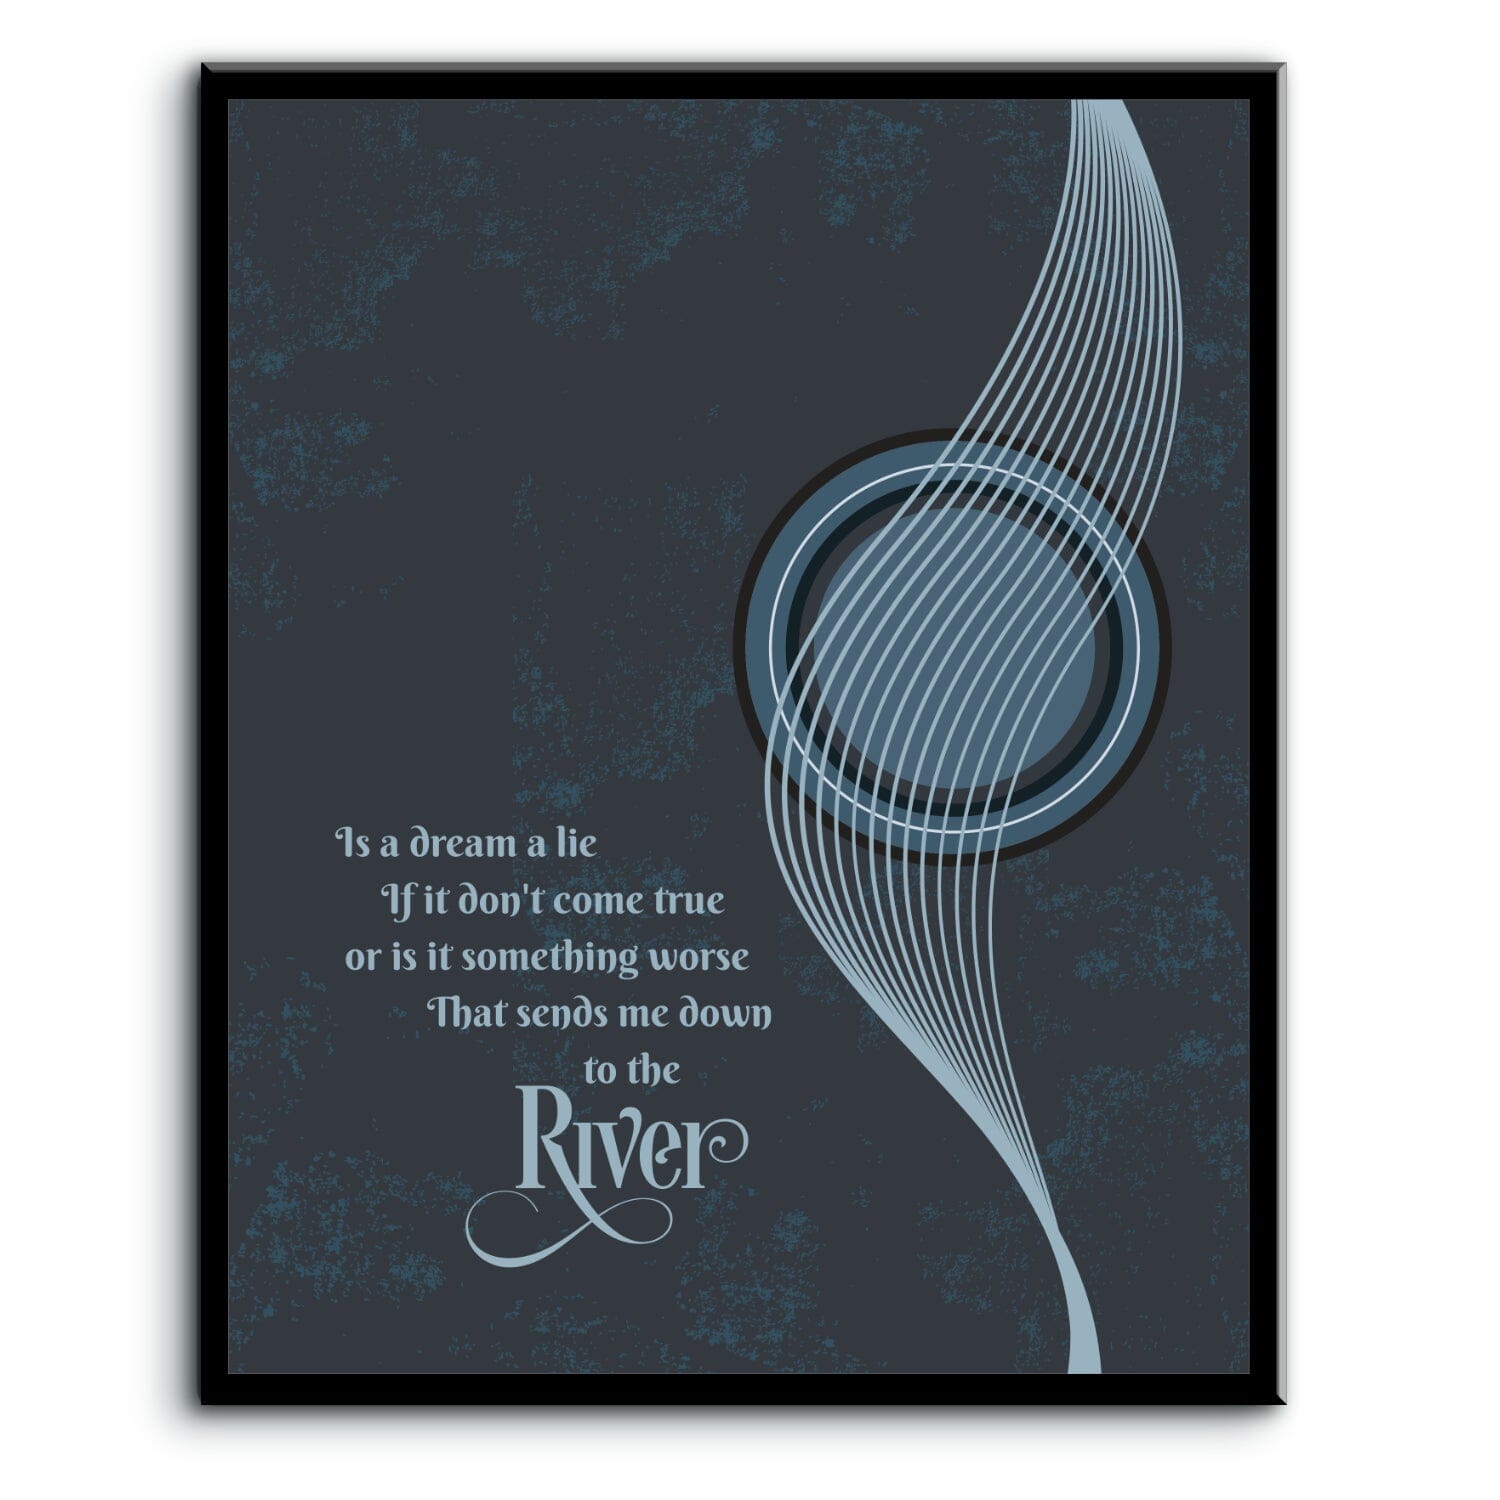 The River by Bruce Springsteen - Classic Rock Wall Artwork Song Lyrics Art Song Lyrics Art 8x10 Plaque Mount 